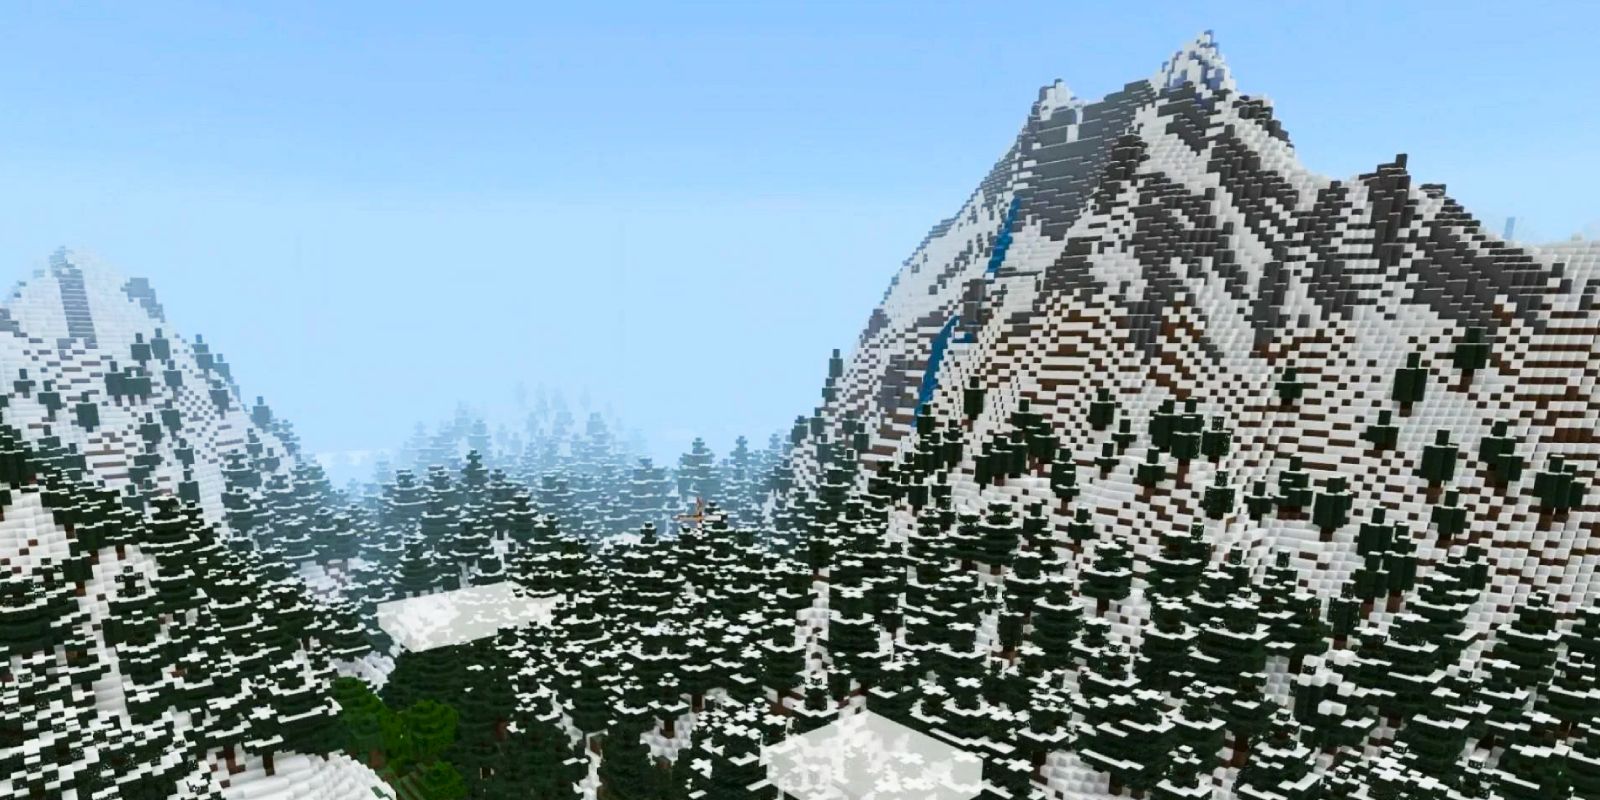 minecraft caves and cliffs update part 2 download